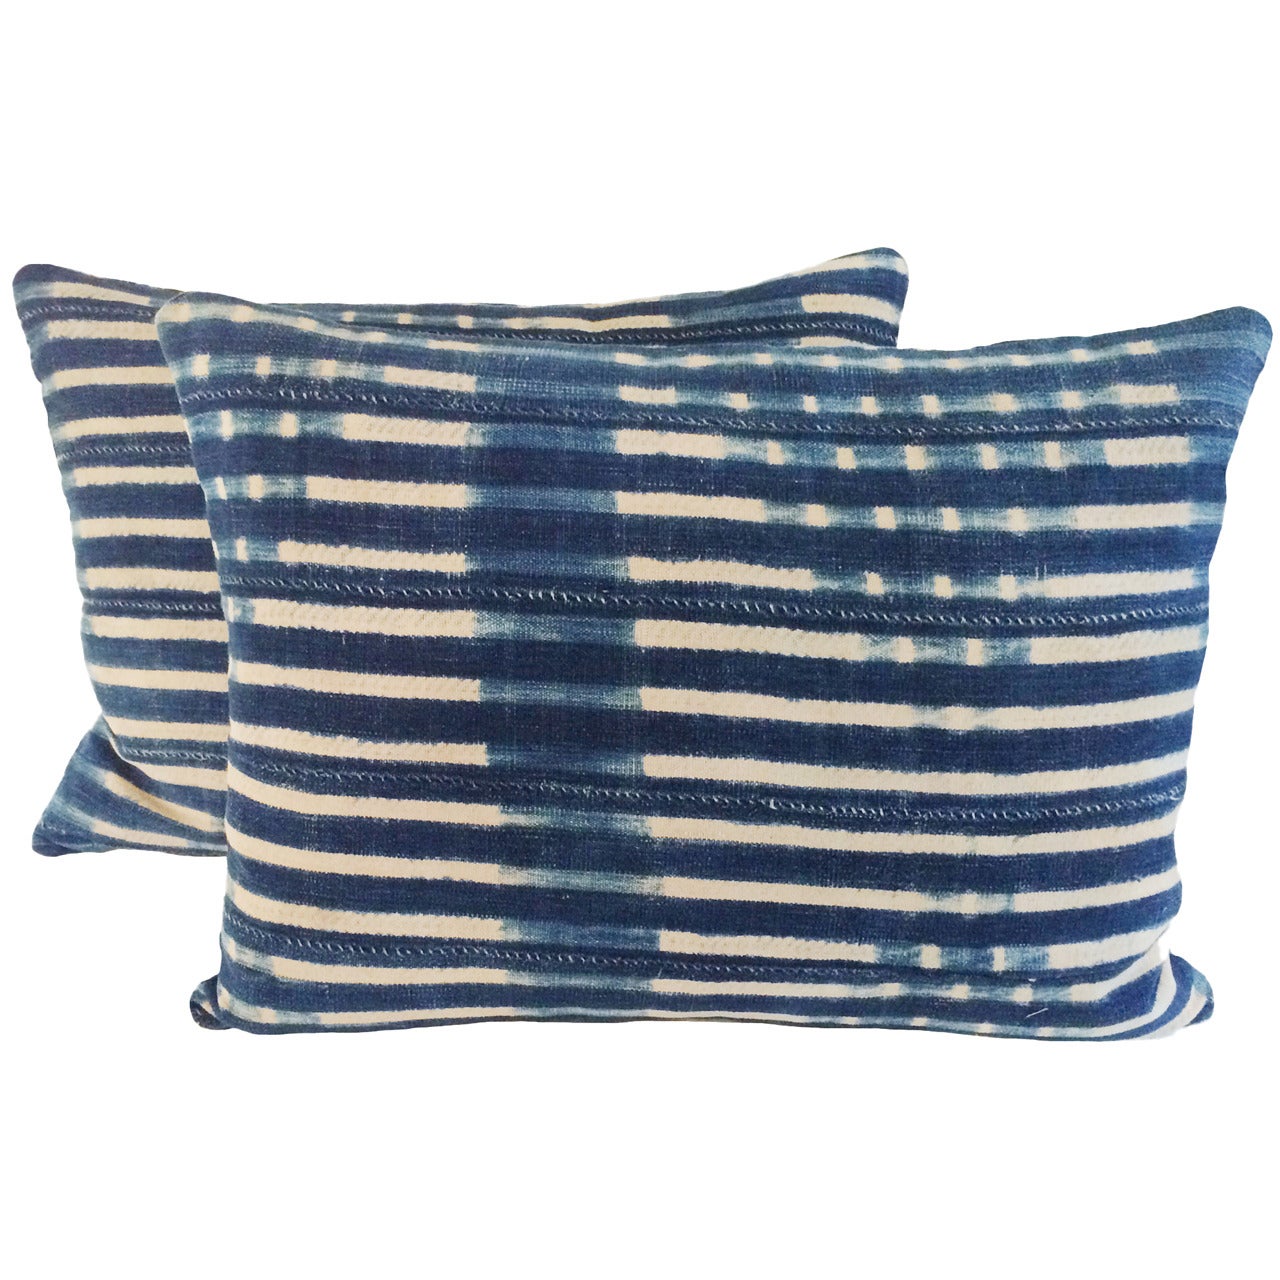 Pair of Striped Batik Pillows